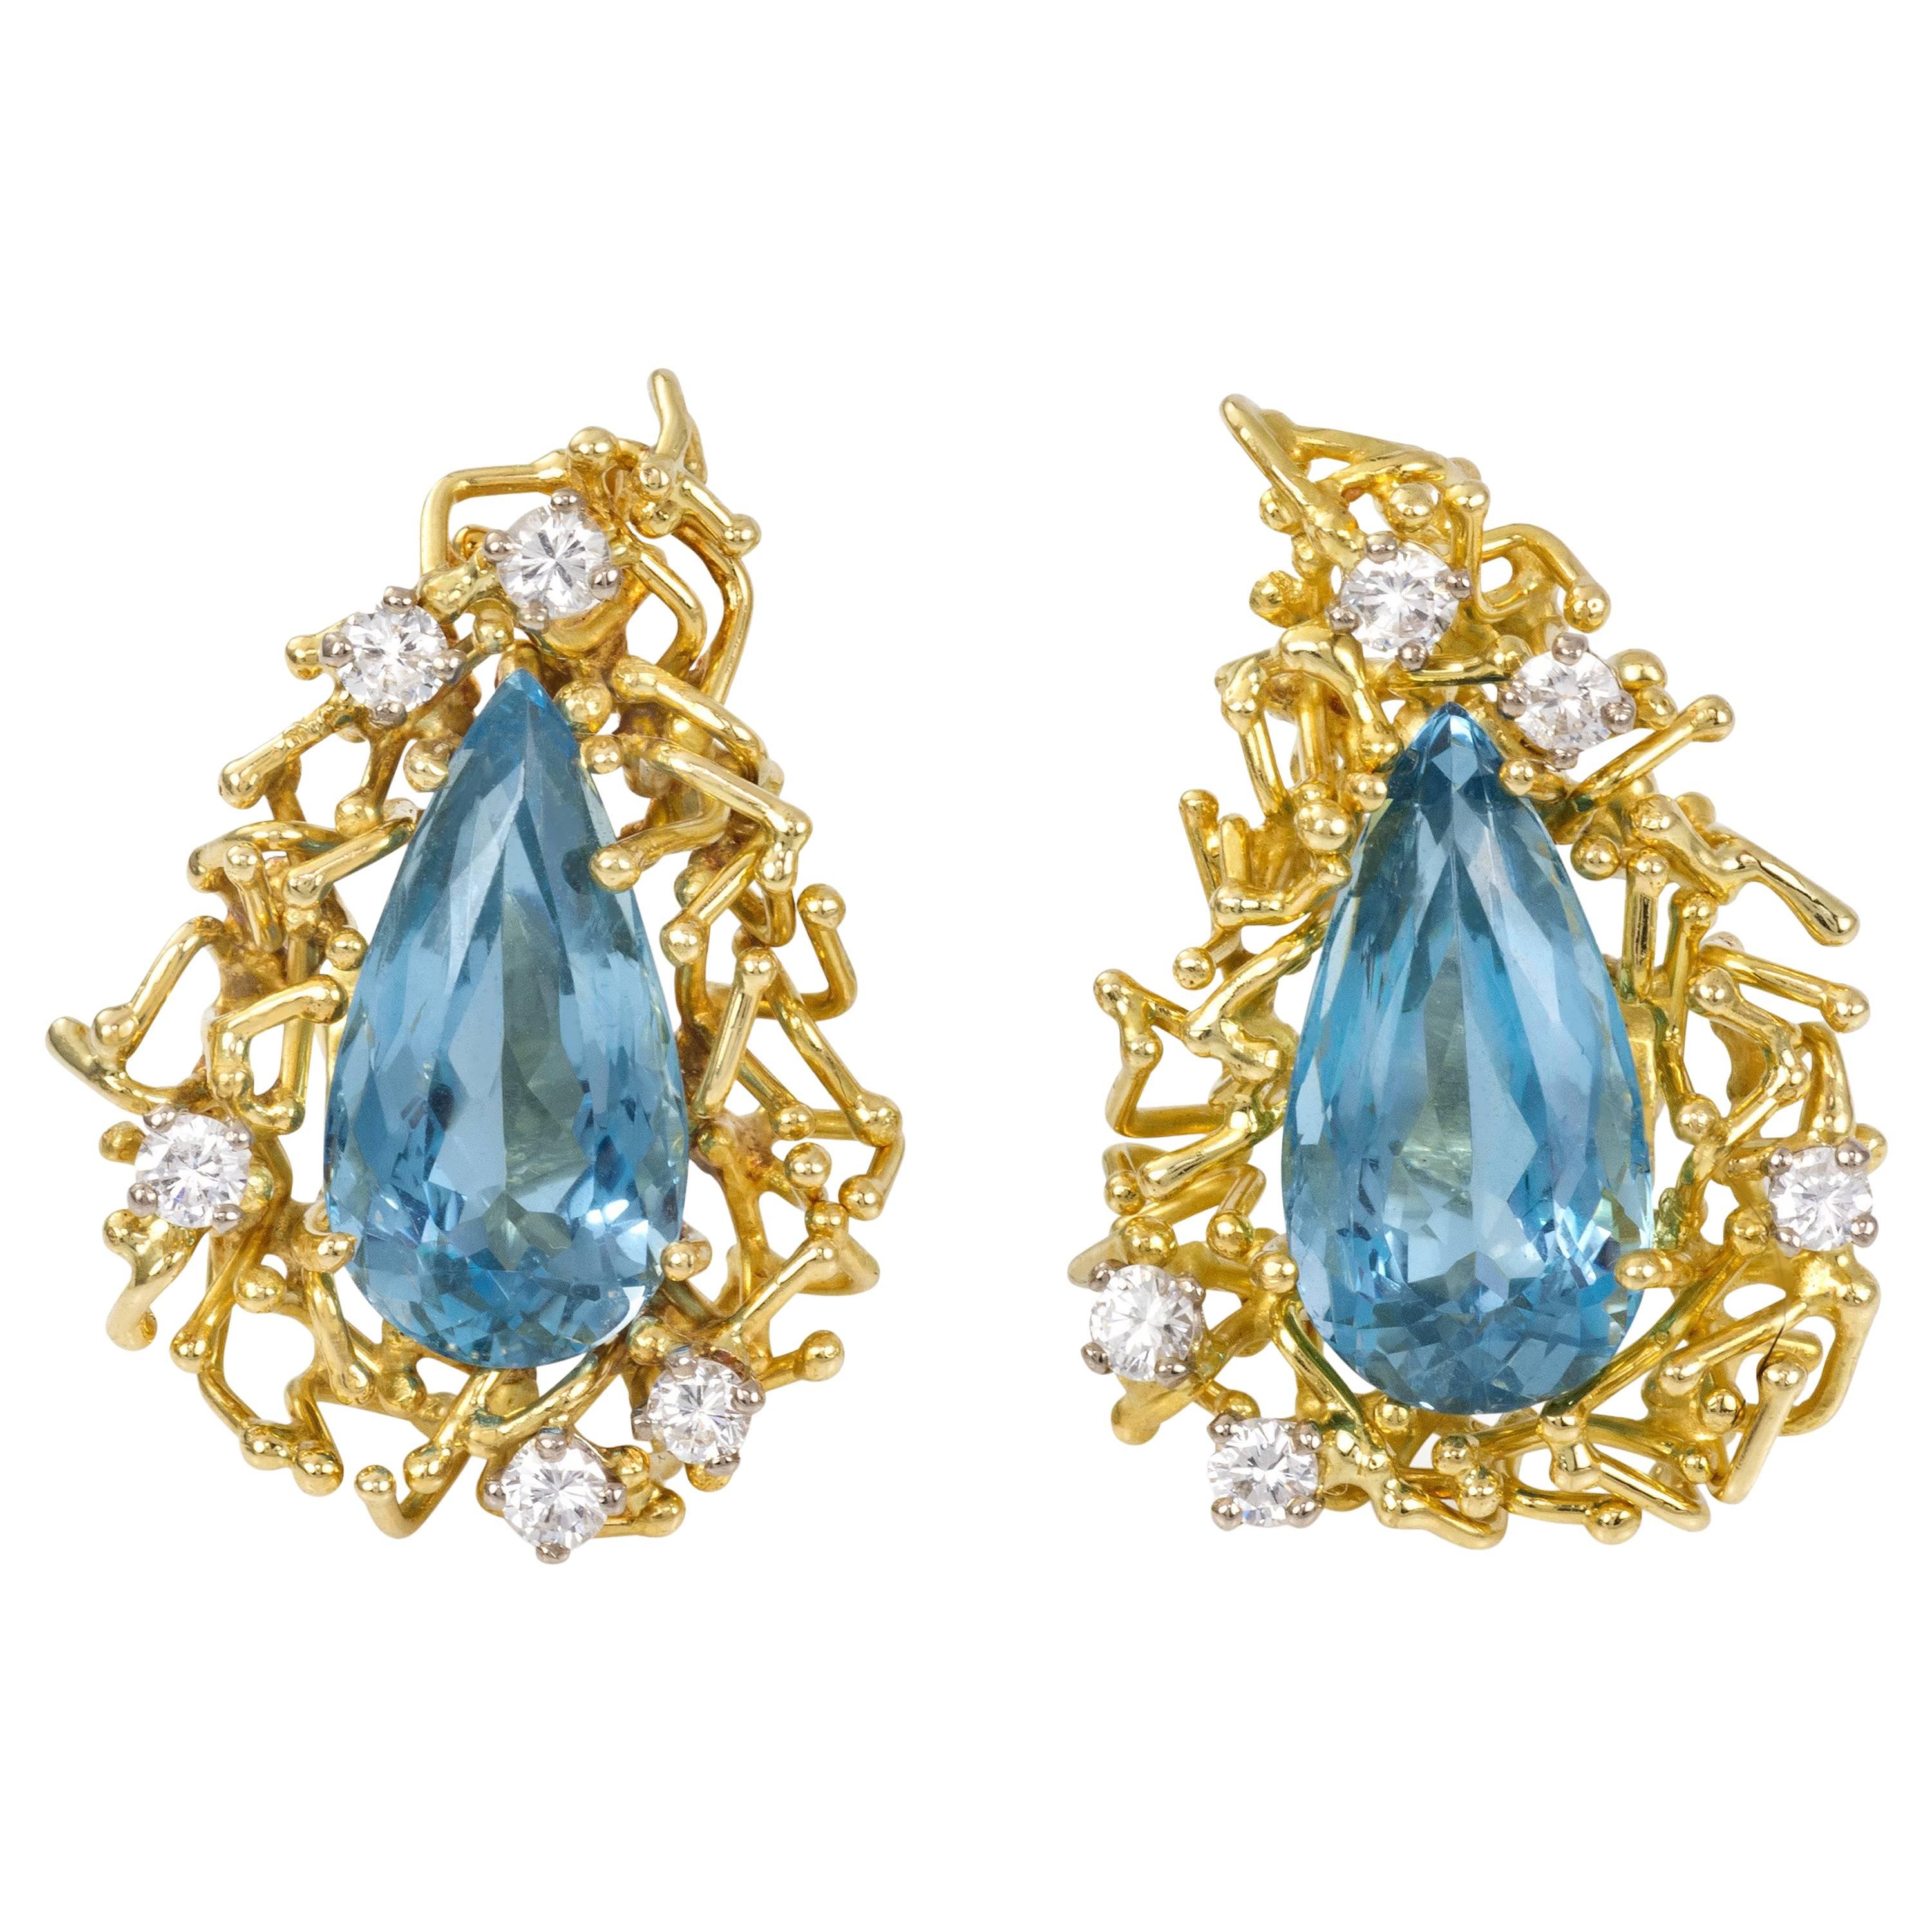 Alan Gard, London, 1968, Aquamarine, Diamond and Gold Earrings